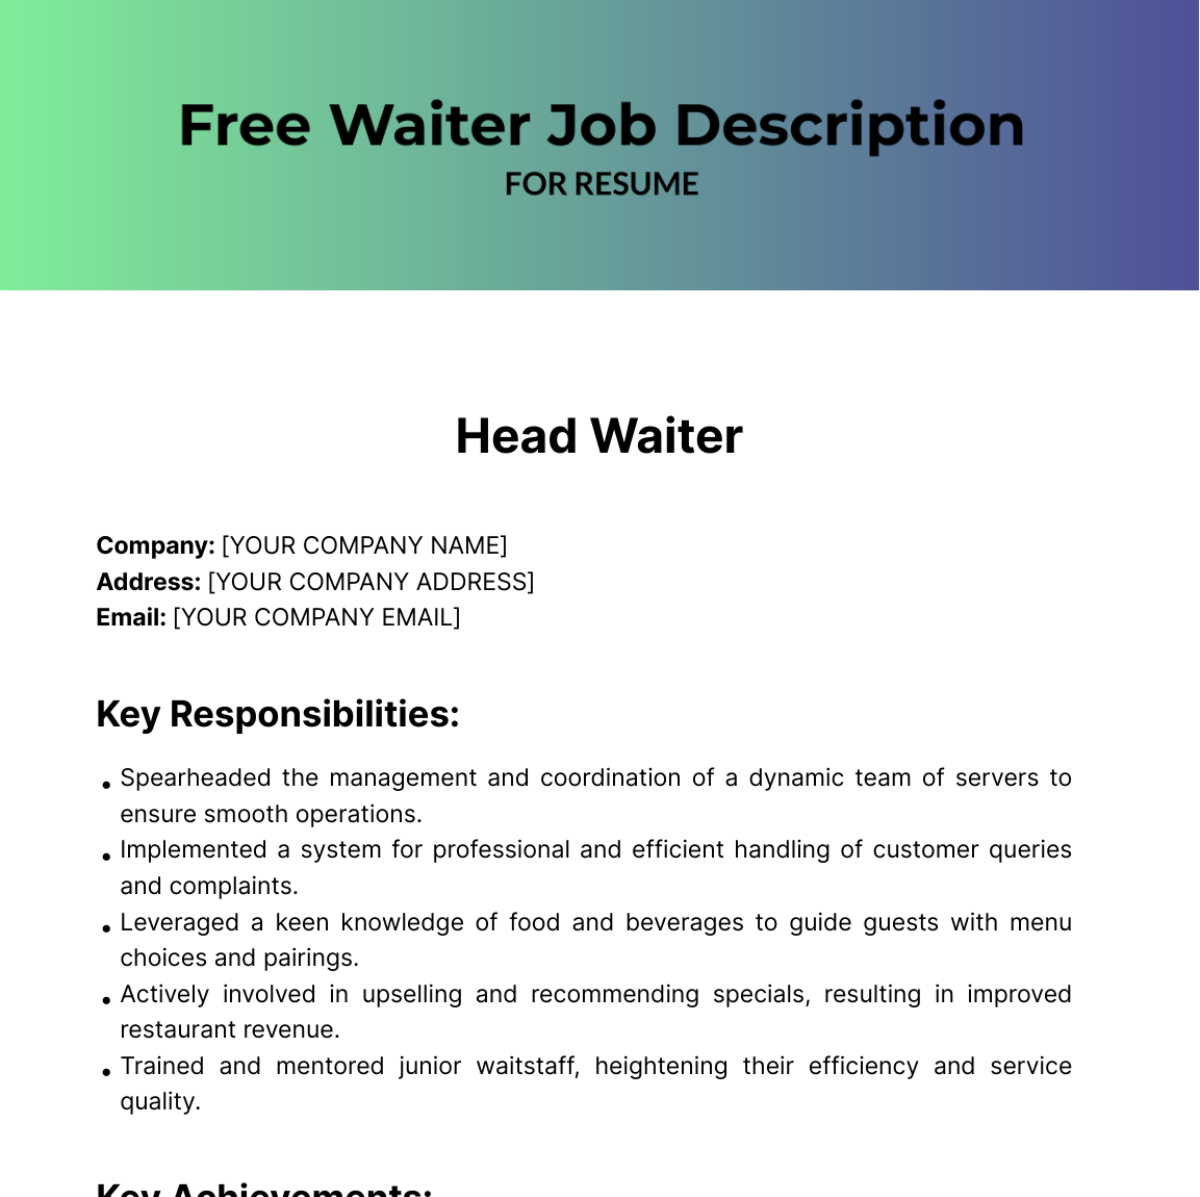 Free Waiter Job Description for Resume Template